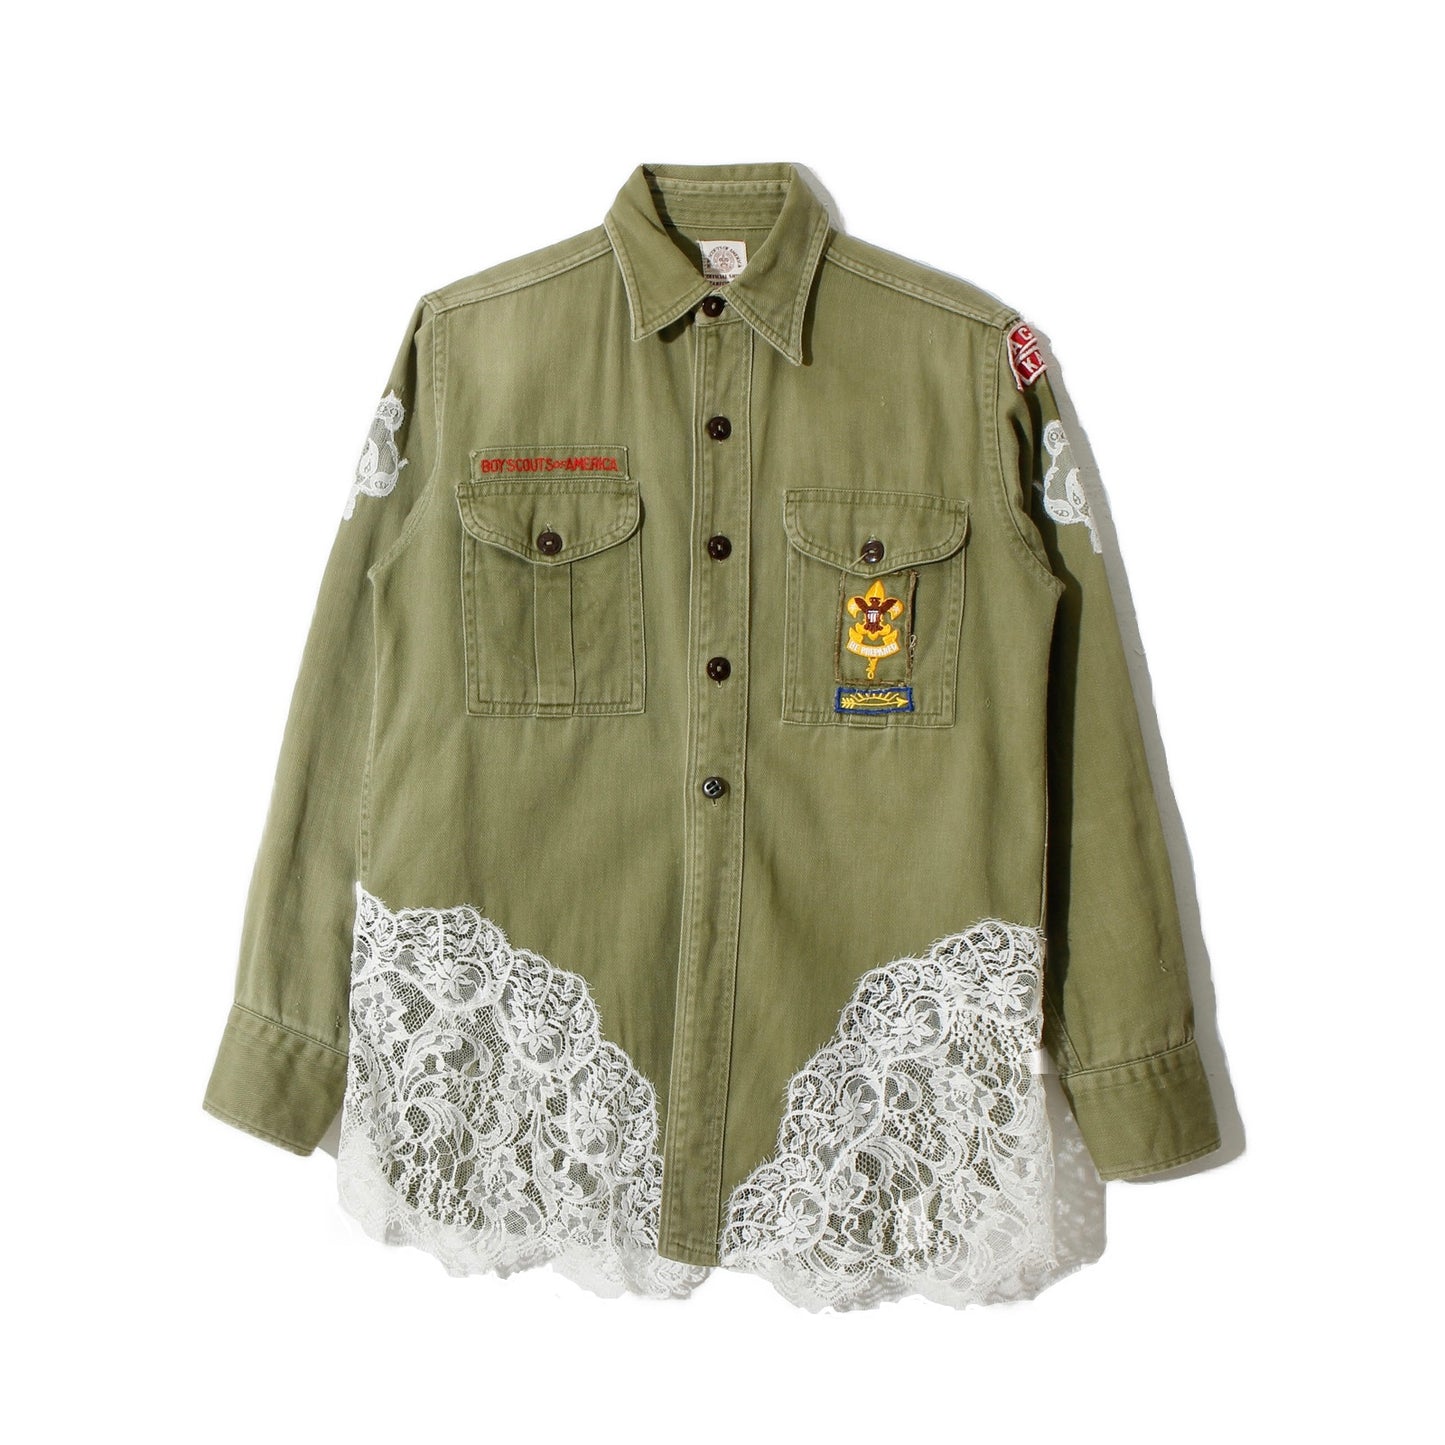 overlace /lace boy scouts shirt